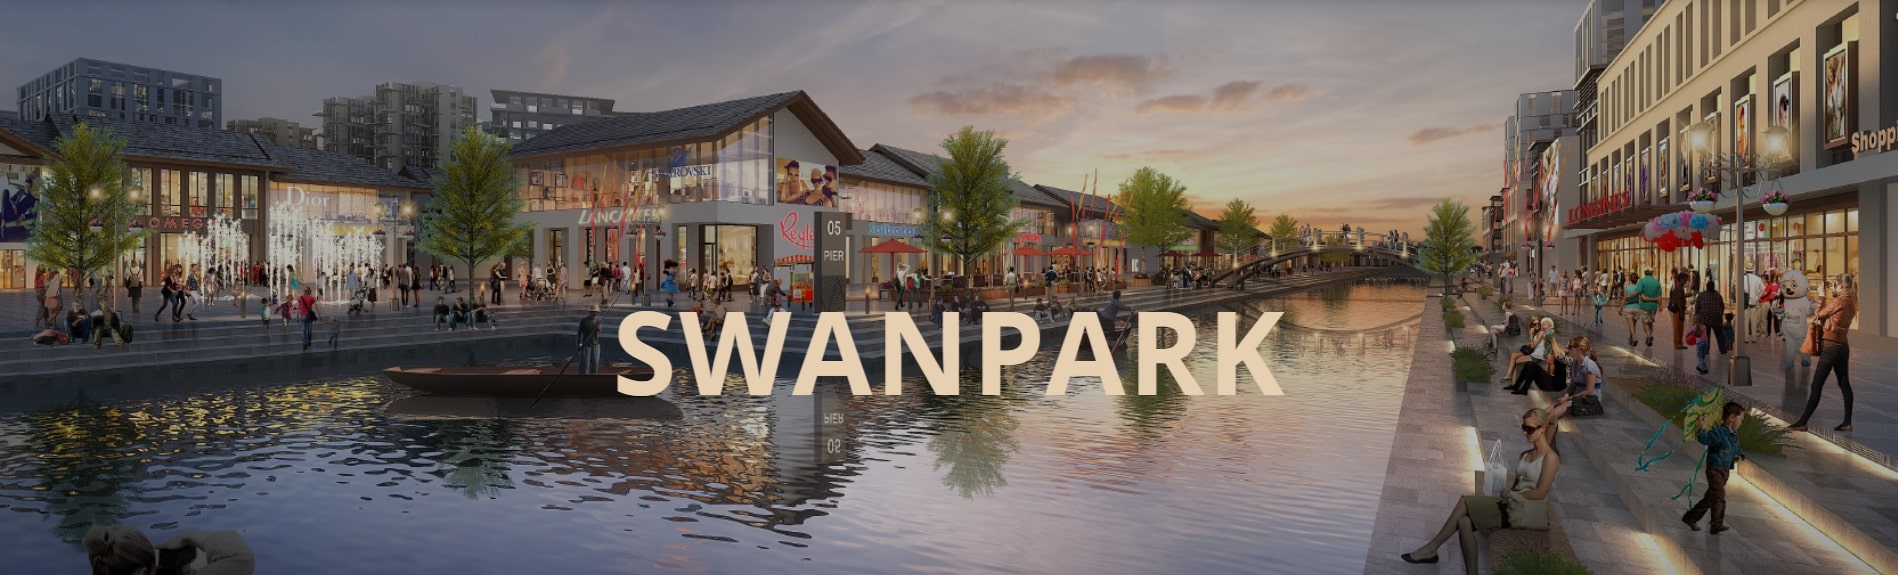 Giới thiệu về Swanpark 